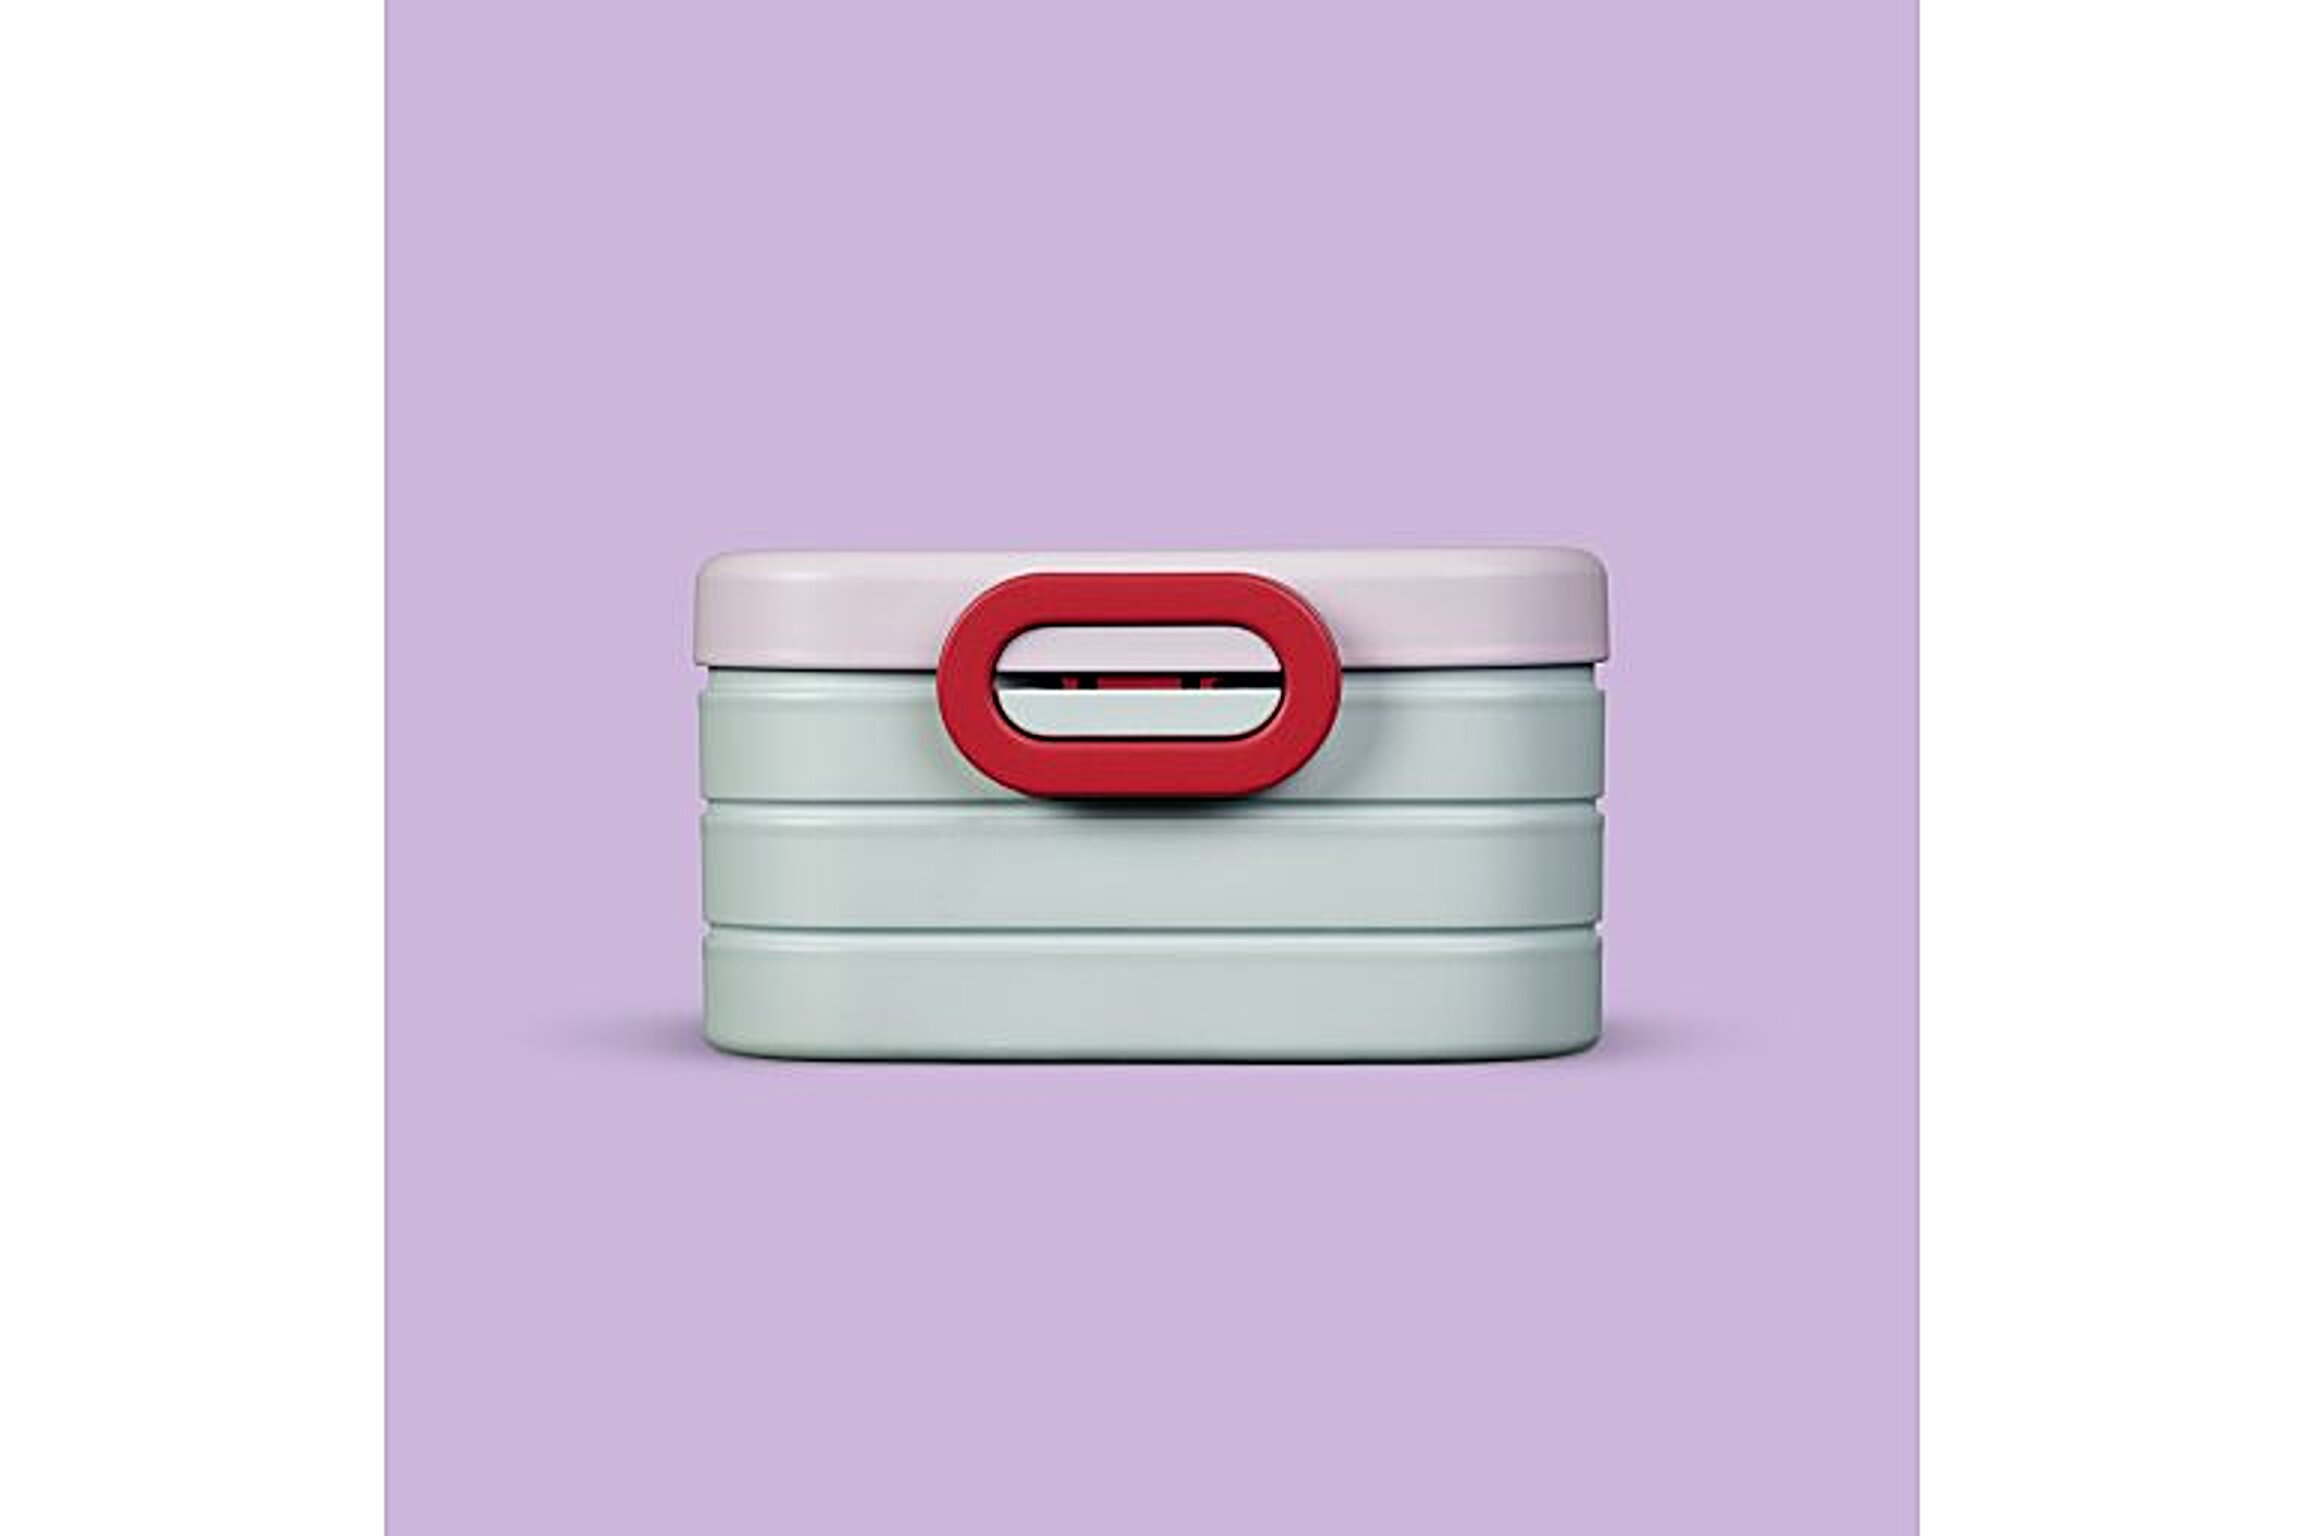 limited edition bento lunch box tab midi - strawberry vibe